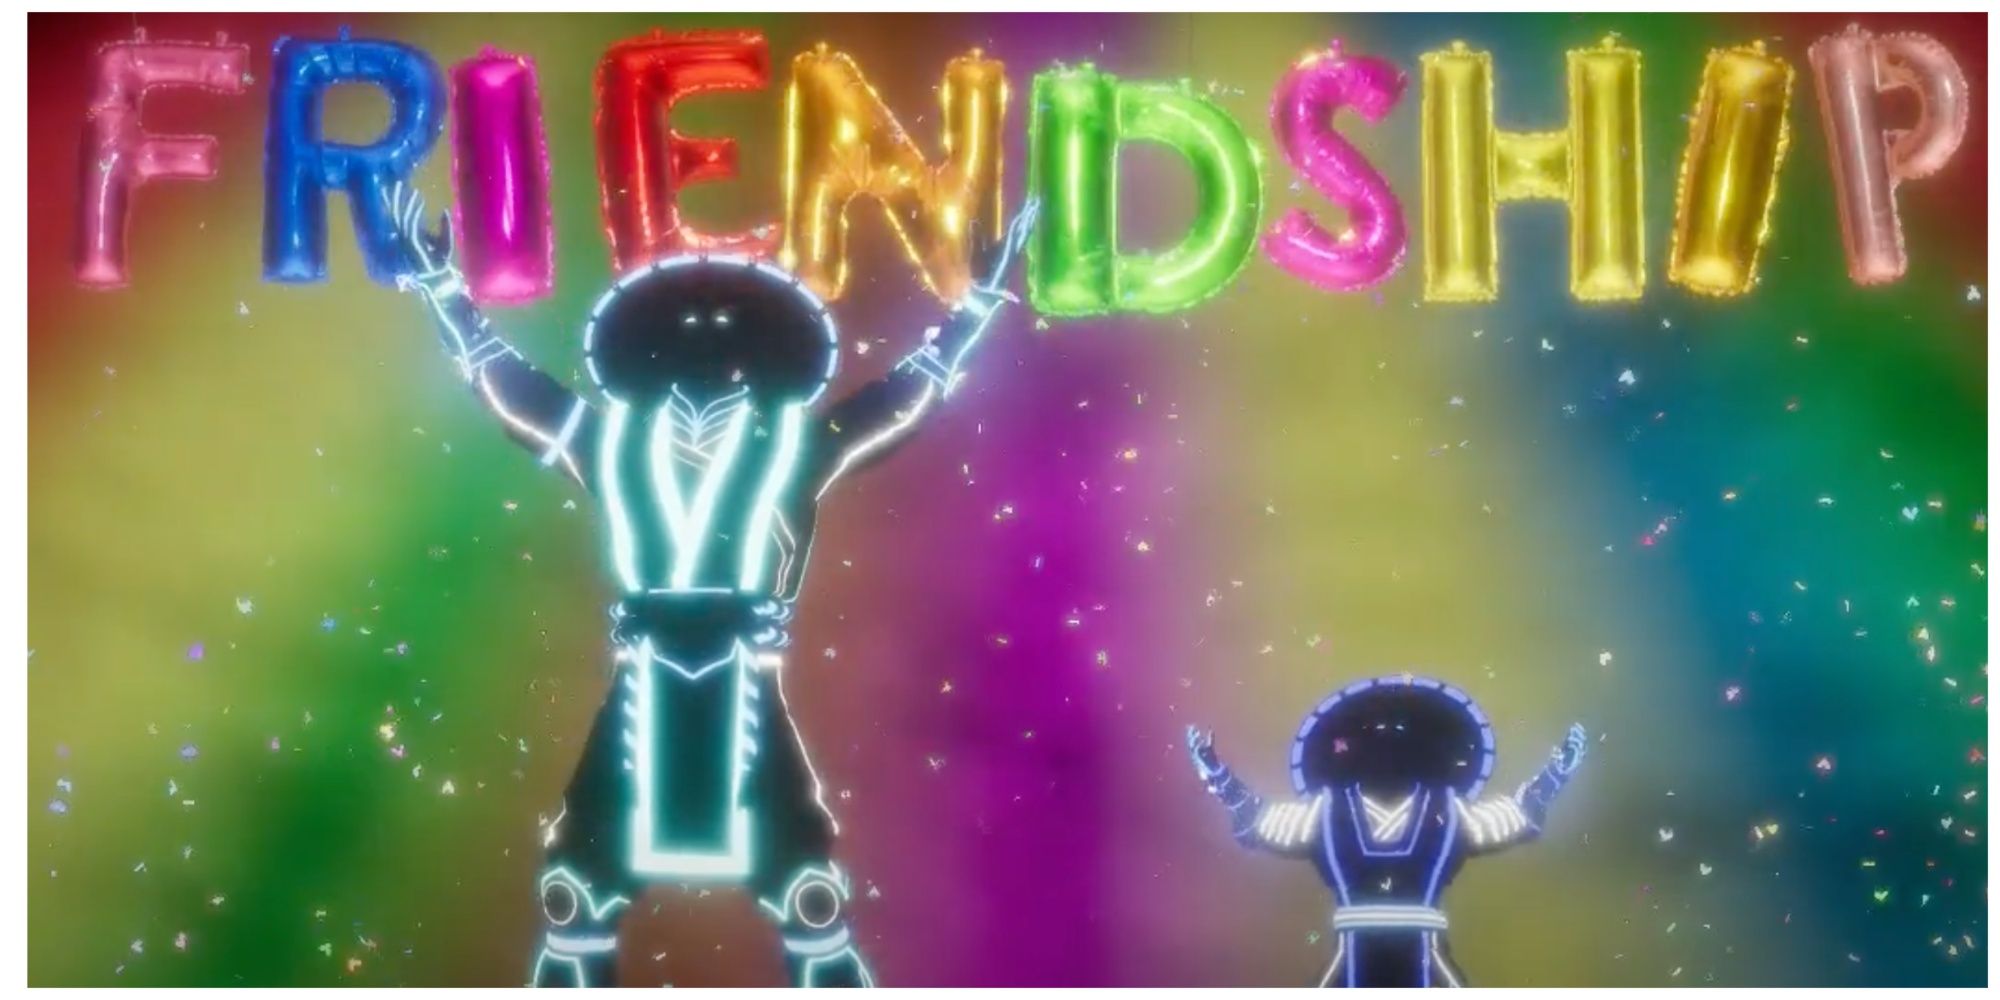 Raiden's Friendship; Performing a laser light show with Kidd Thunder, his miniature doppleganger